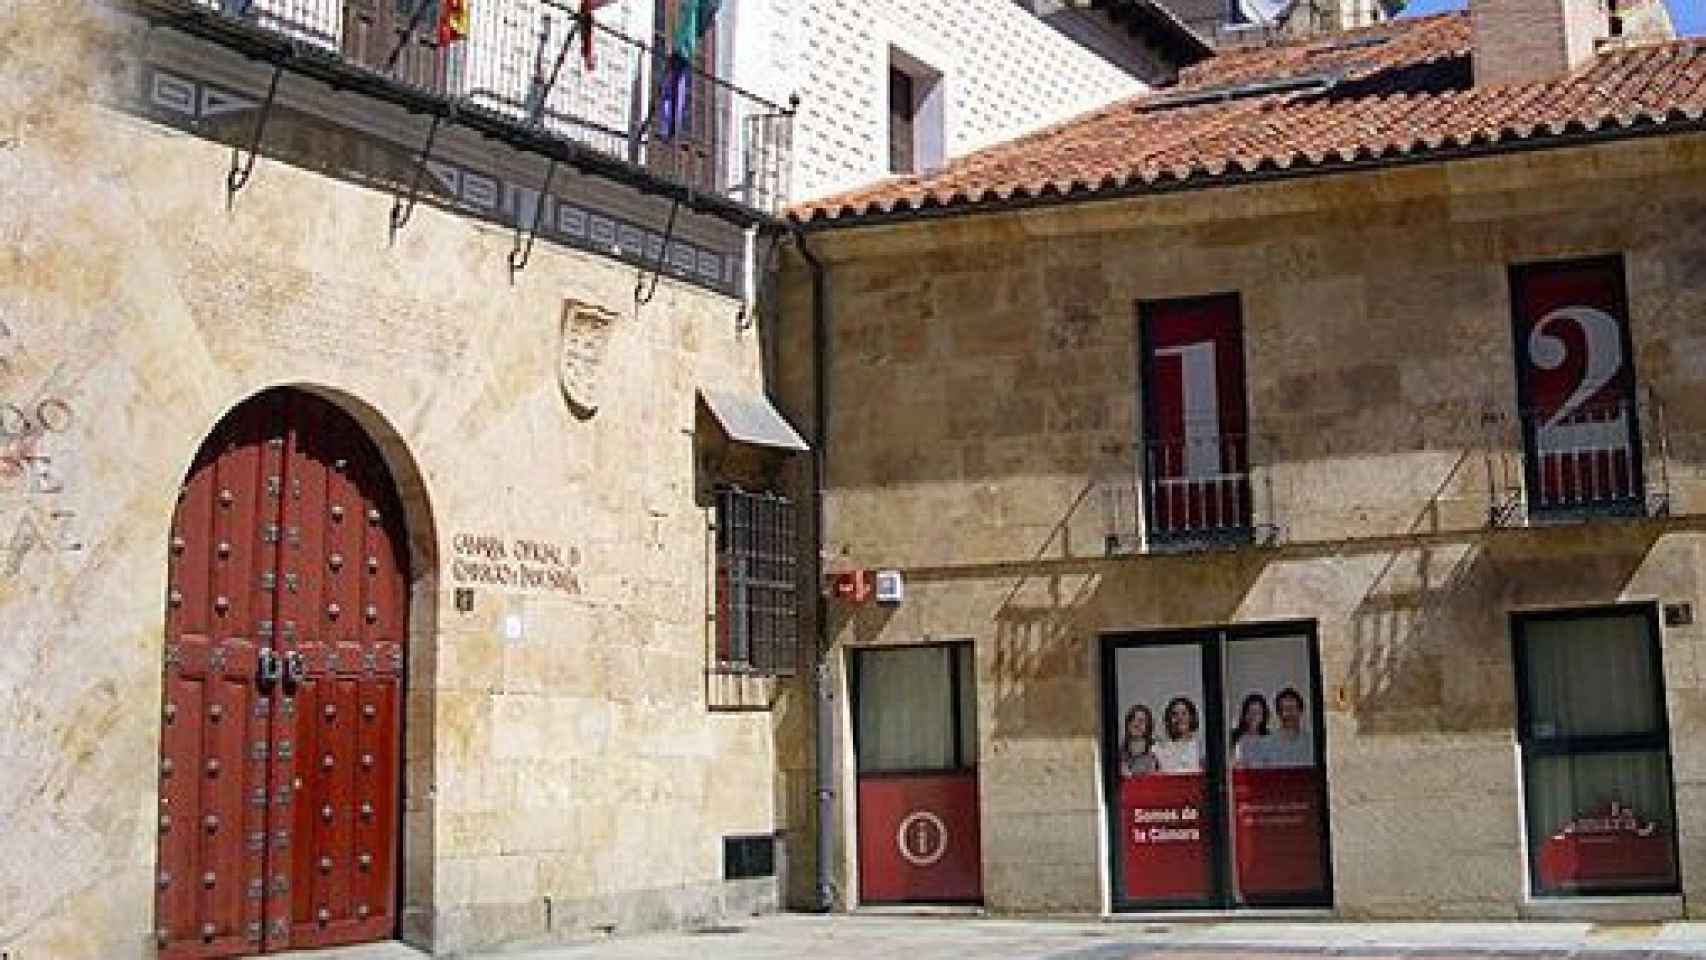 Cámara de Comercio de Salamanca